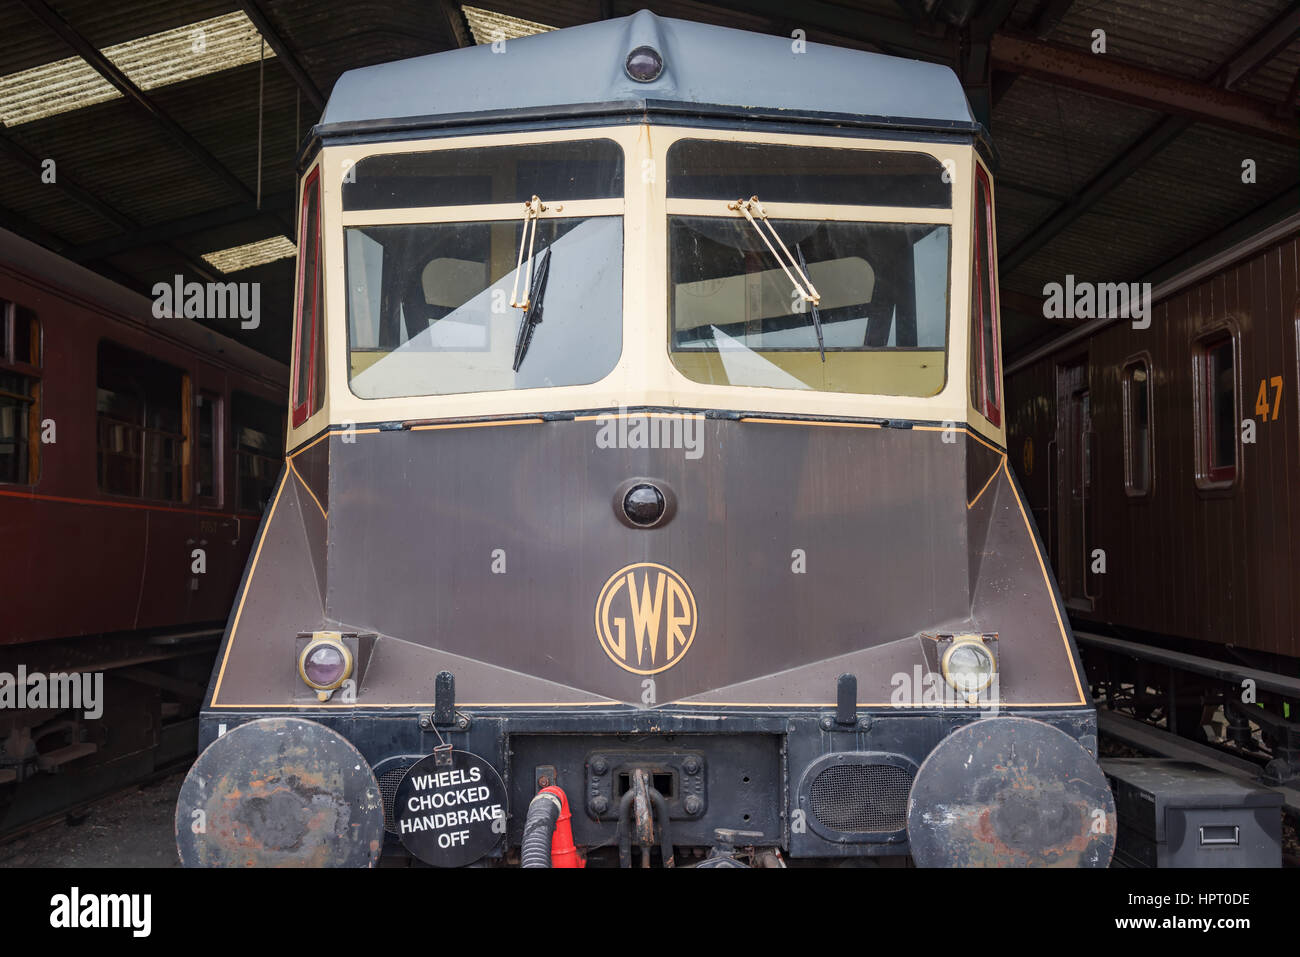 GWR heritage vagone ferroviario a Didcot railway centre Foto Stock